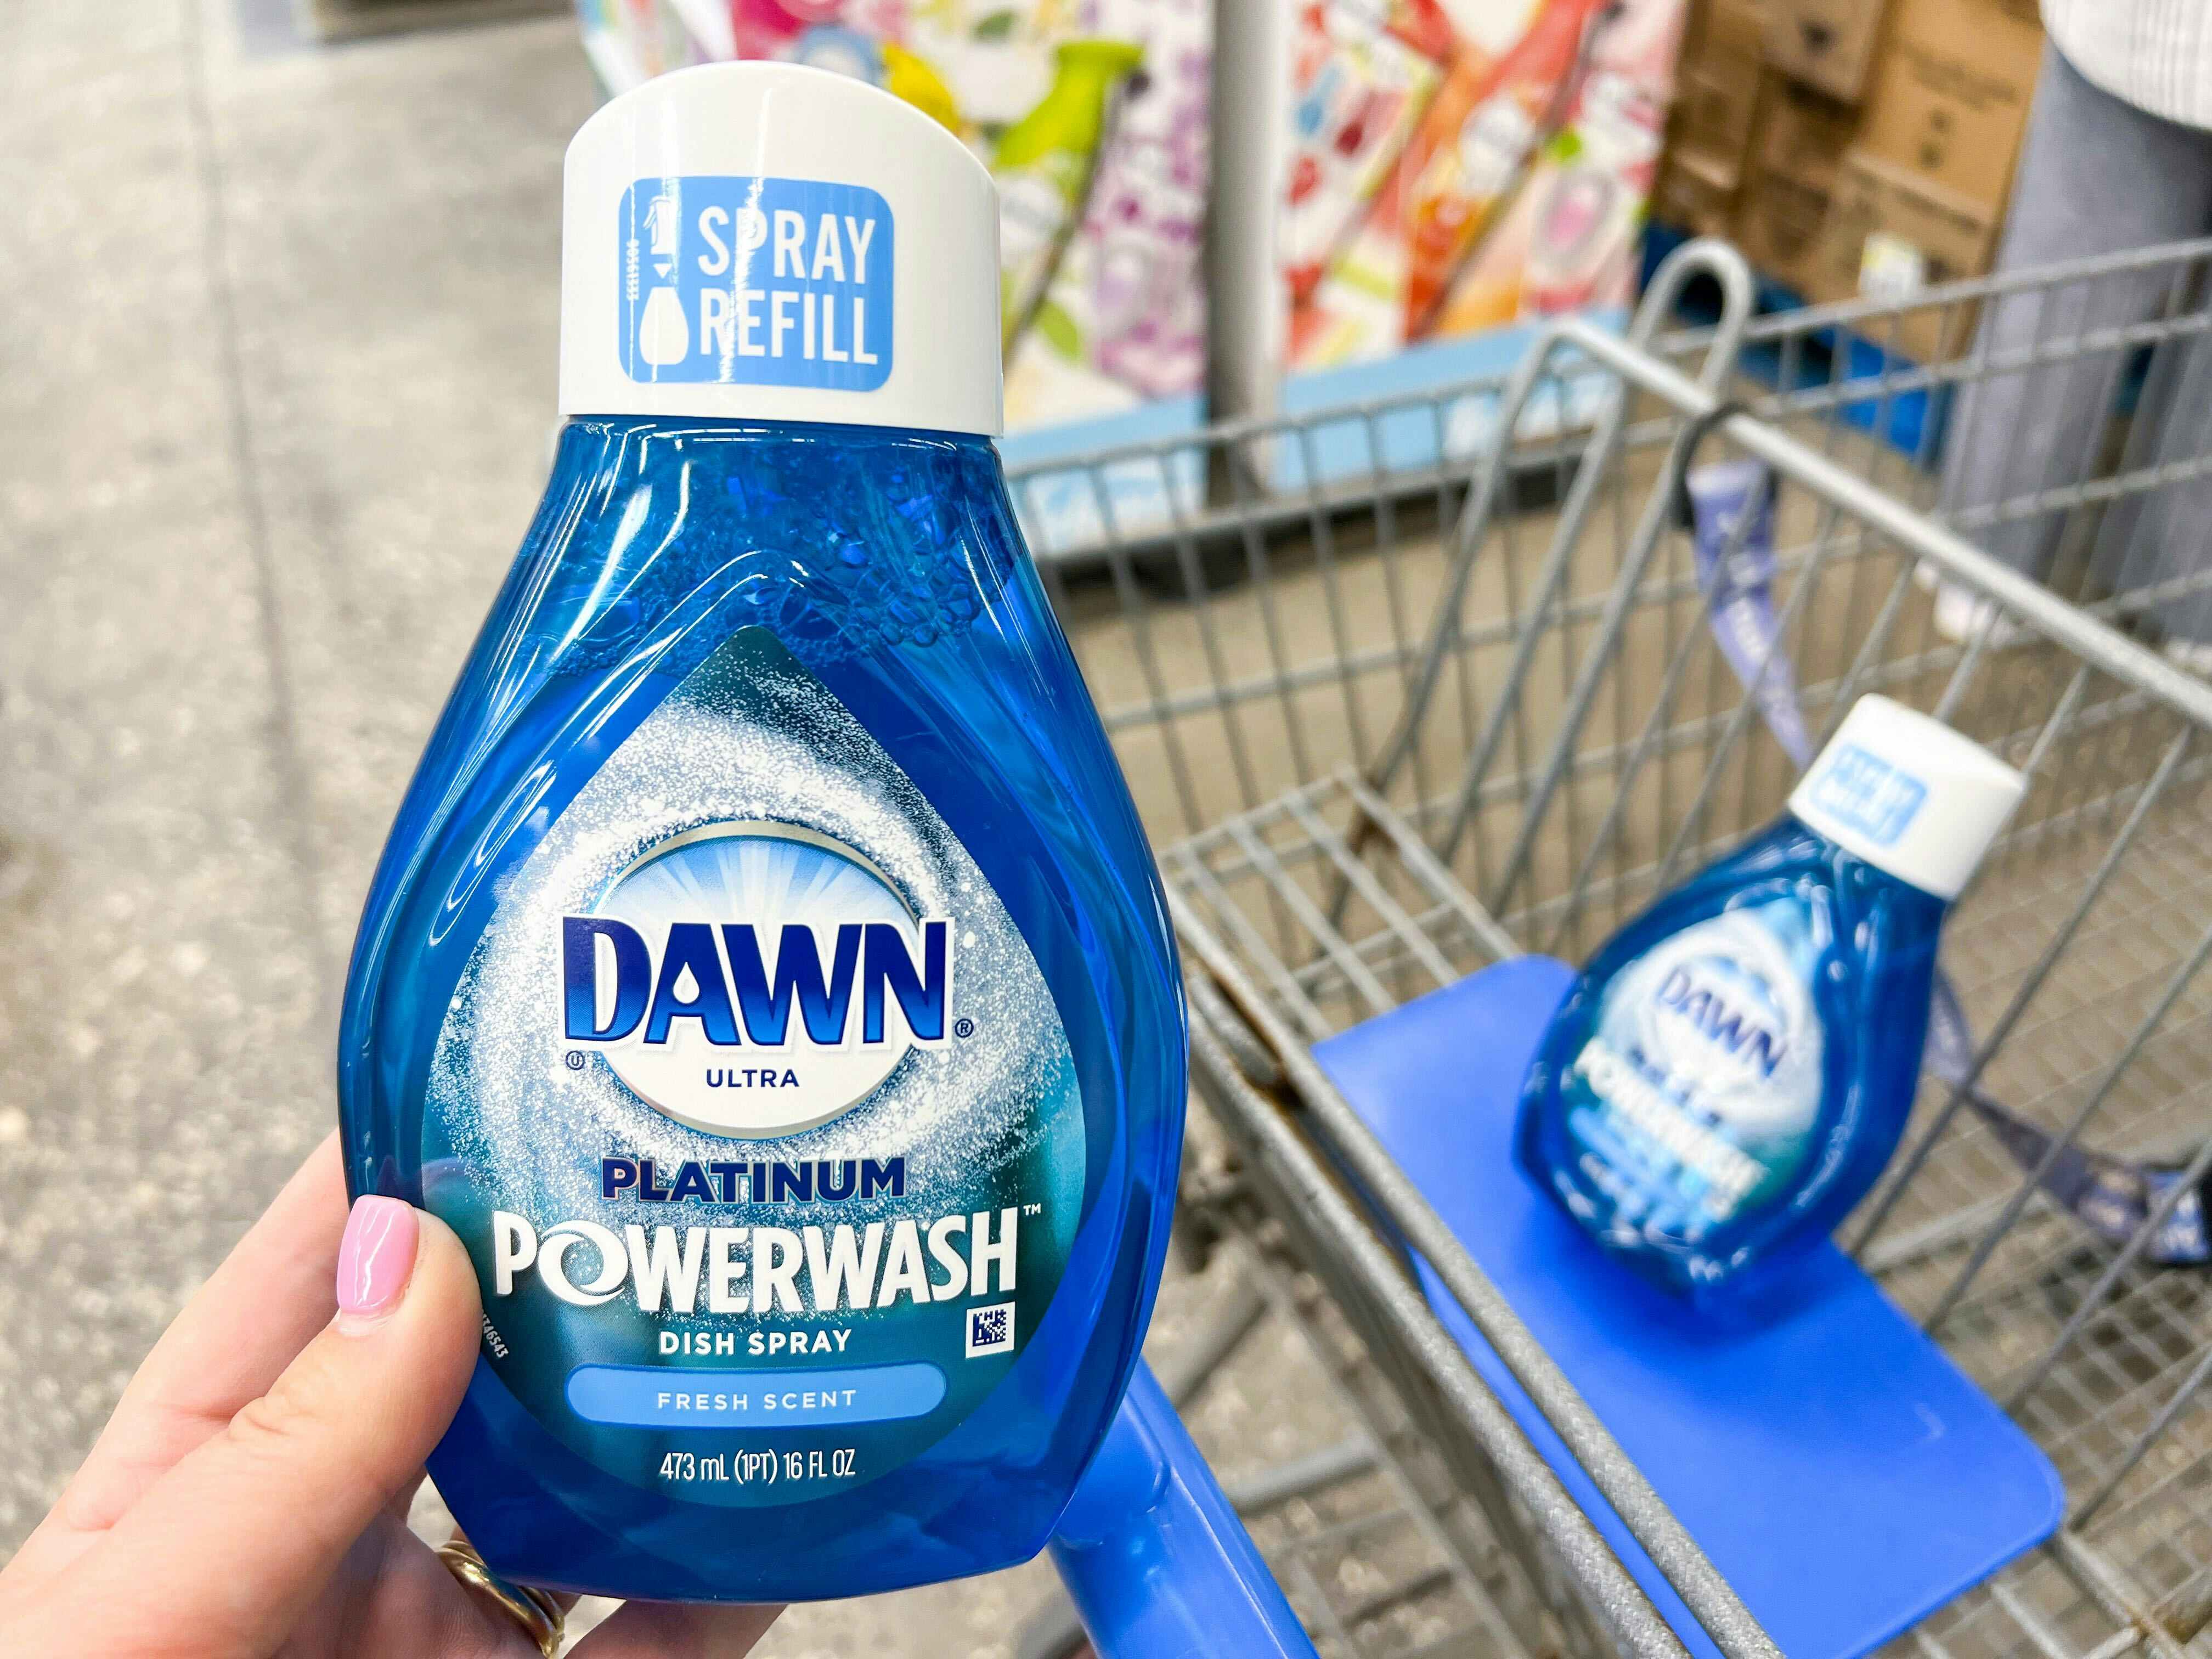 Hot Deal: $1.94 Dawn PowerWash Refills at Walmart